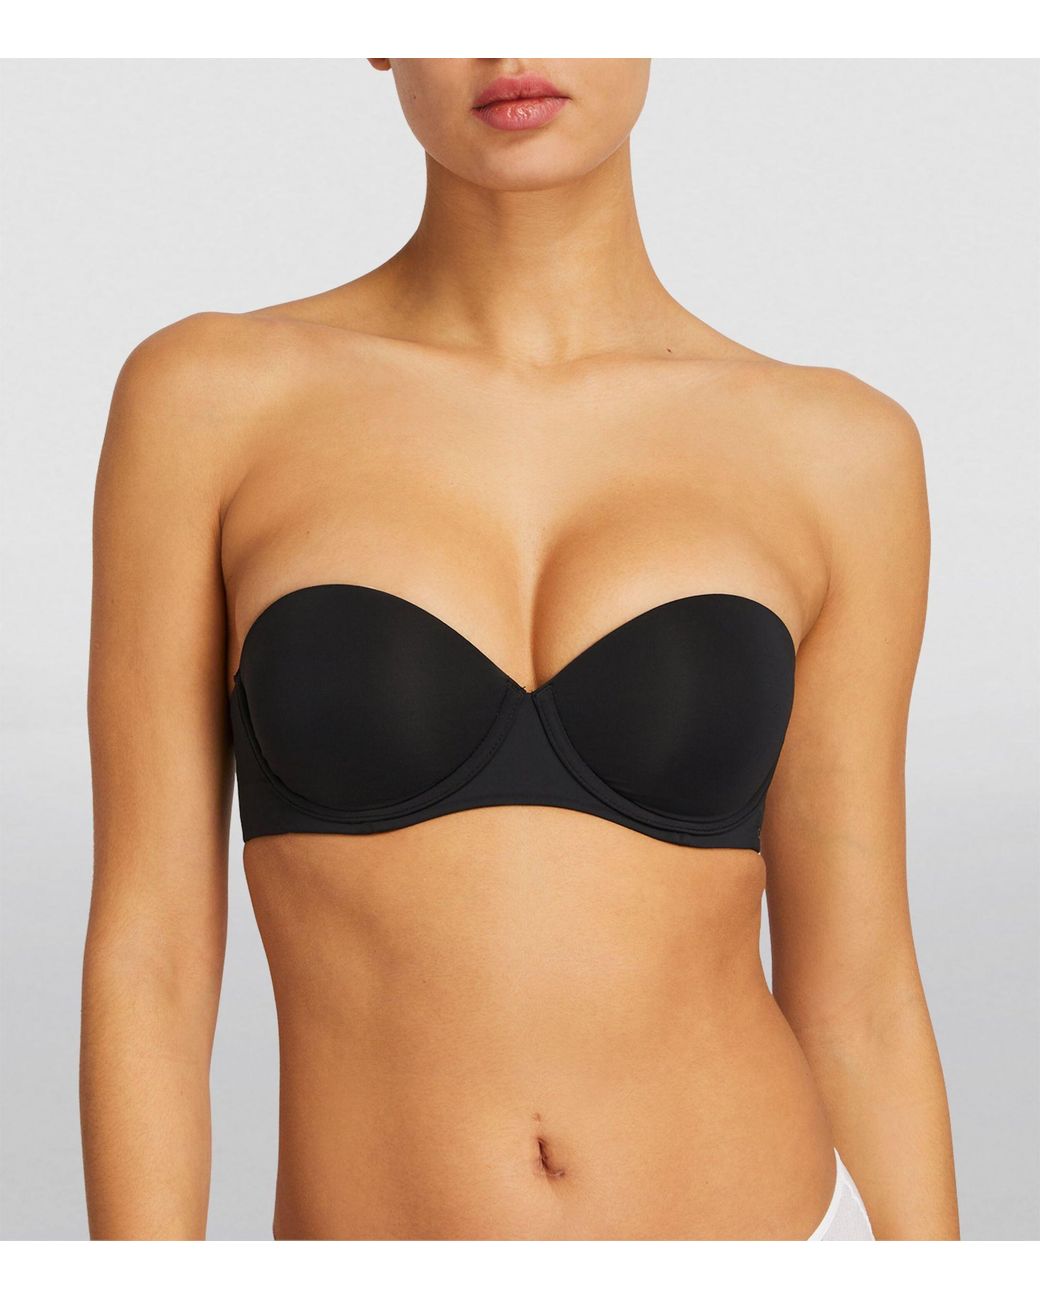 New Calvin Klein womens Strapless t-shirt bra push-up black Sz 38B 111-76 